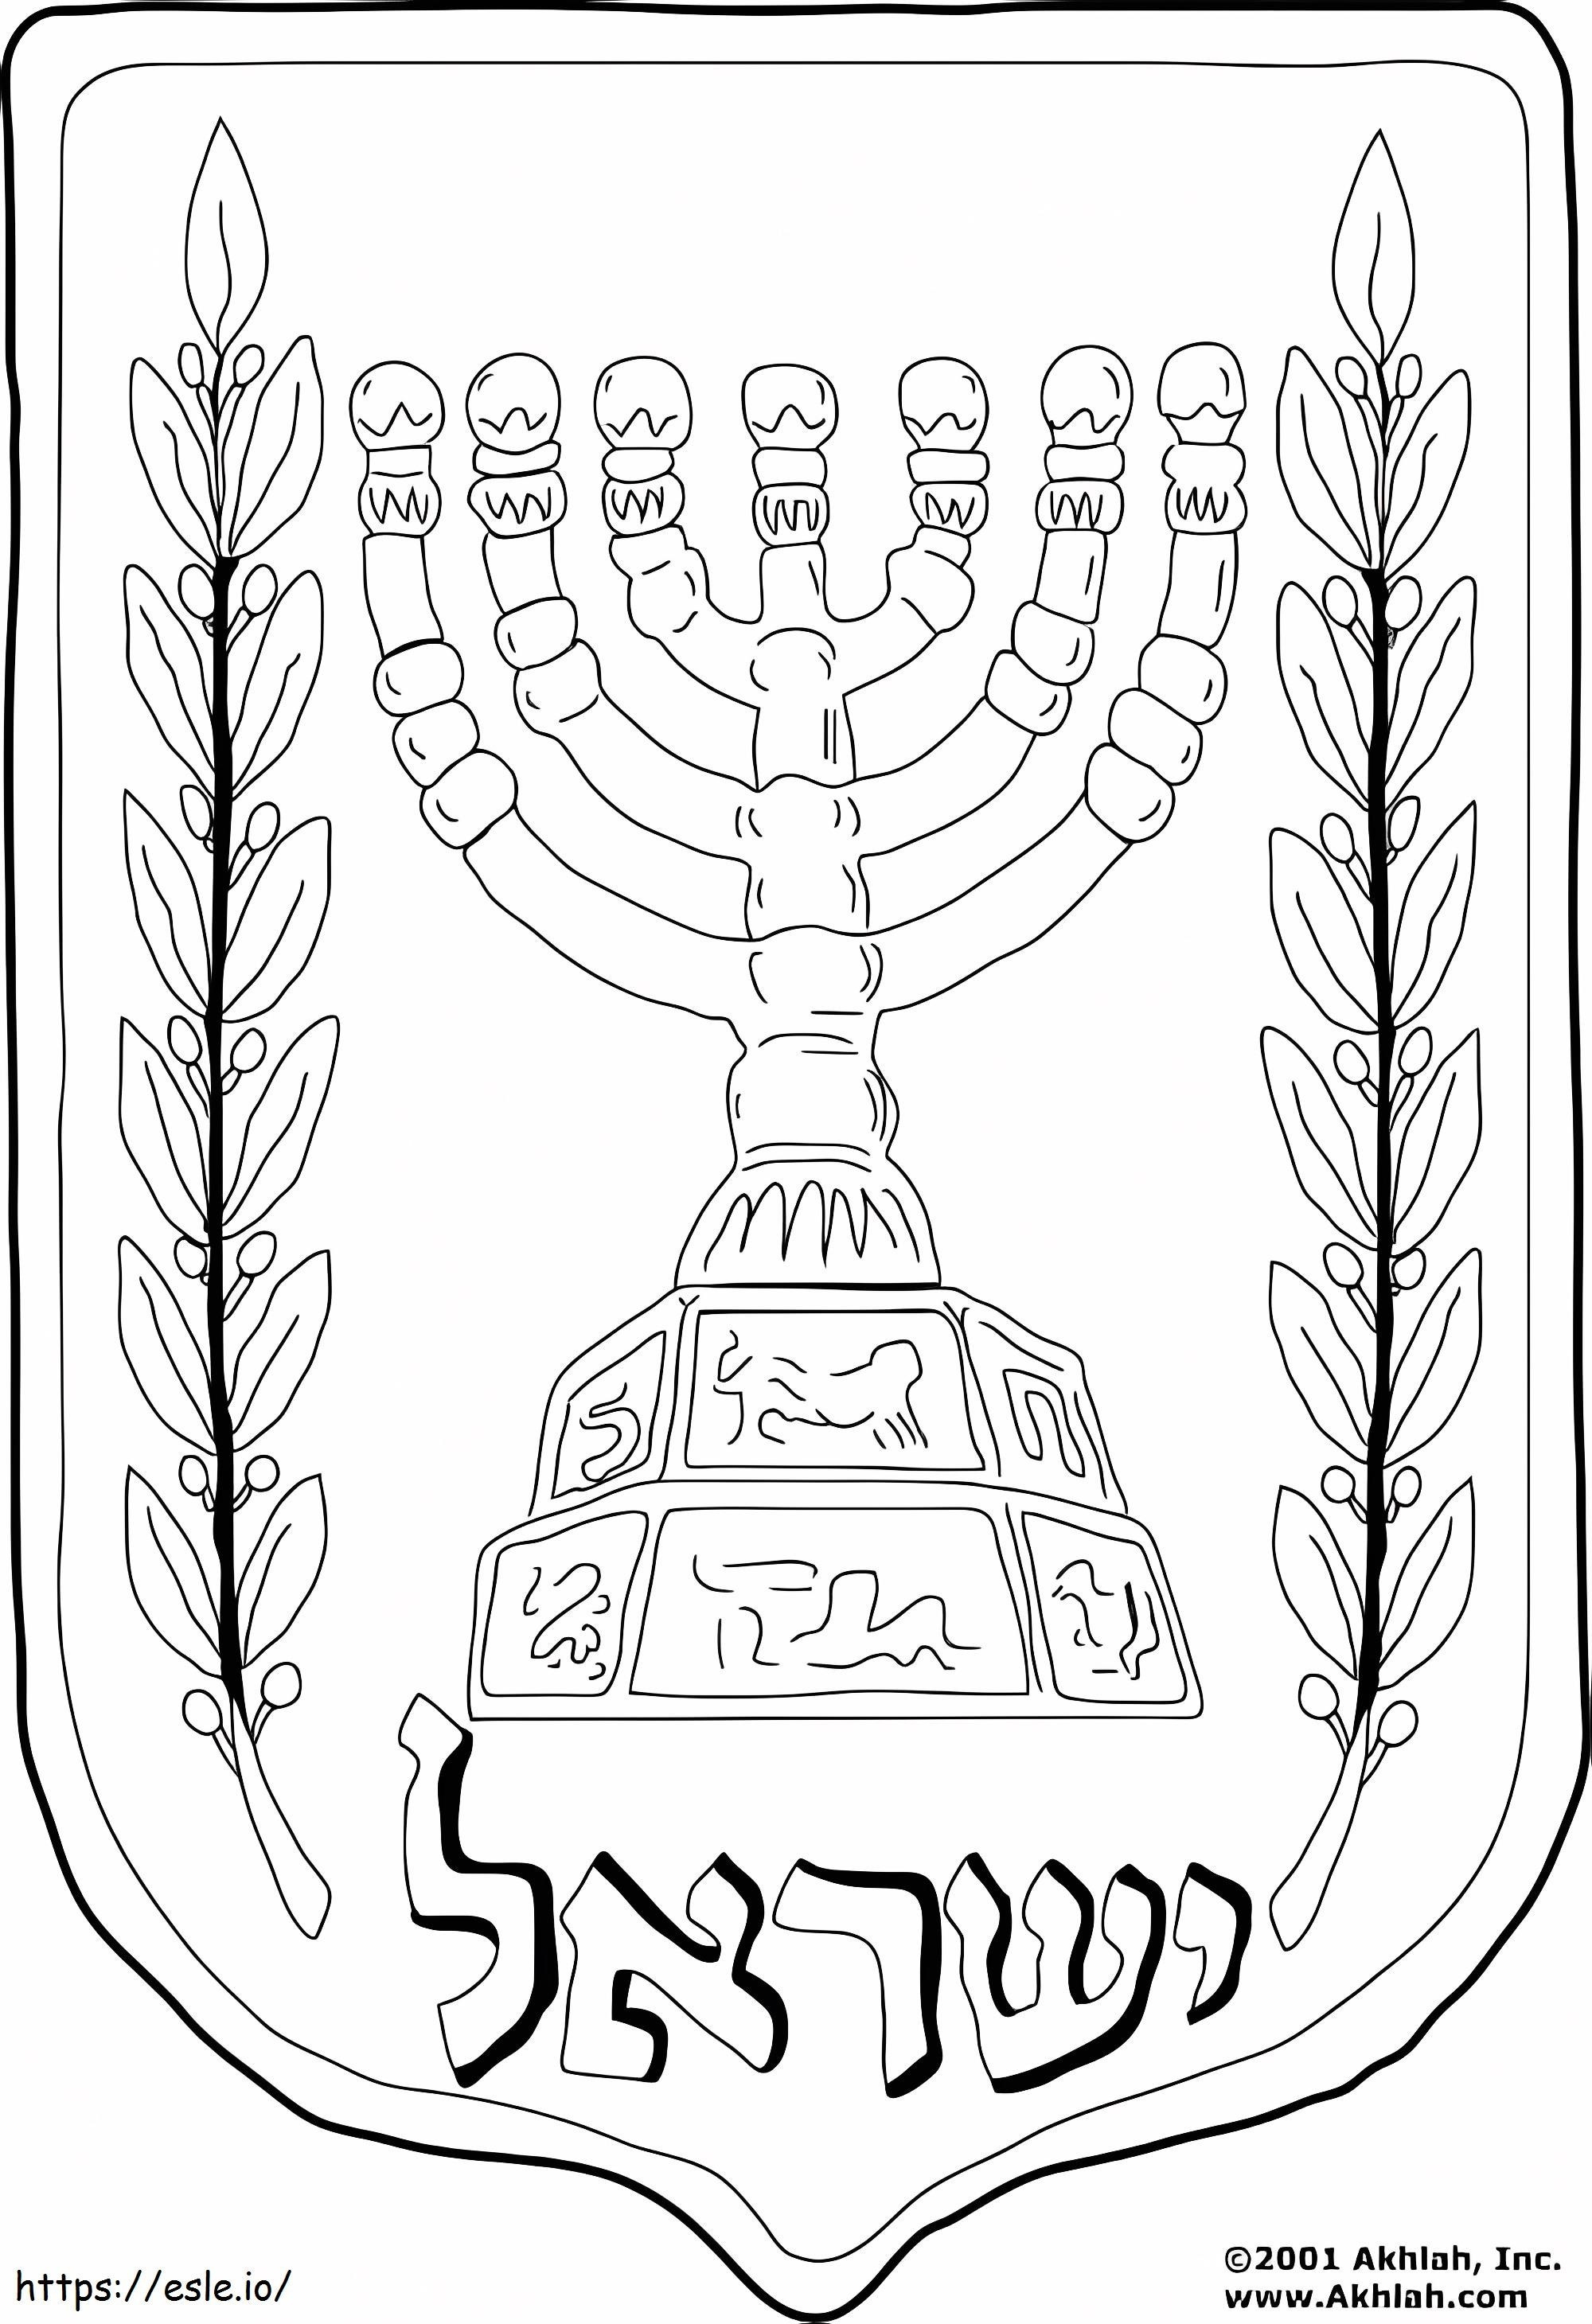 Emblem Of Israel coloring page